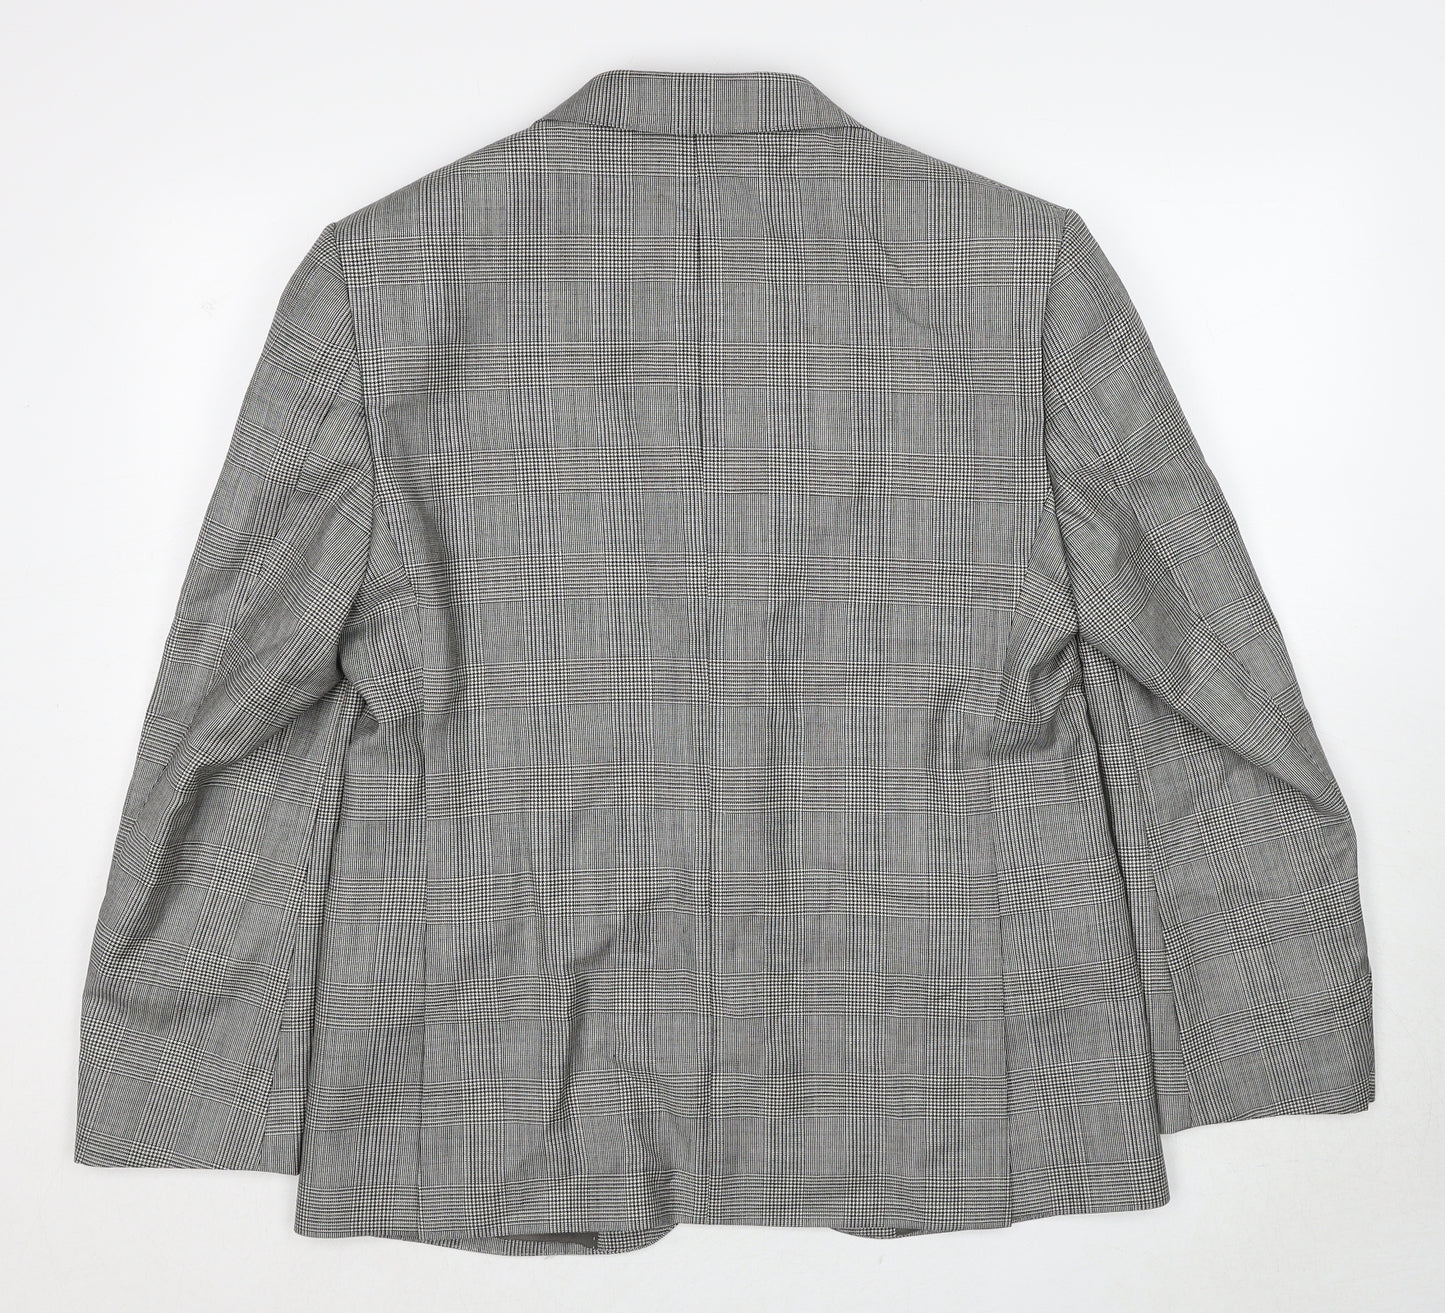 Marks and Spencer Mens Grey Plaid Wool Jacket Suit Jacket Size 40 Regular